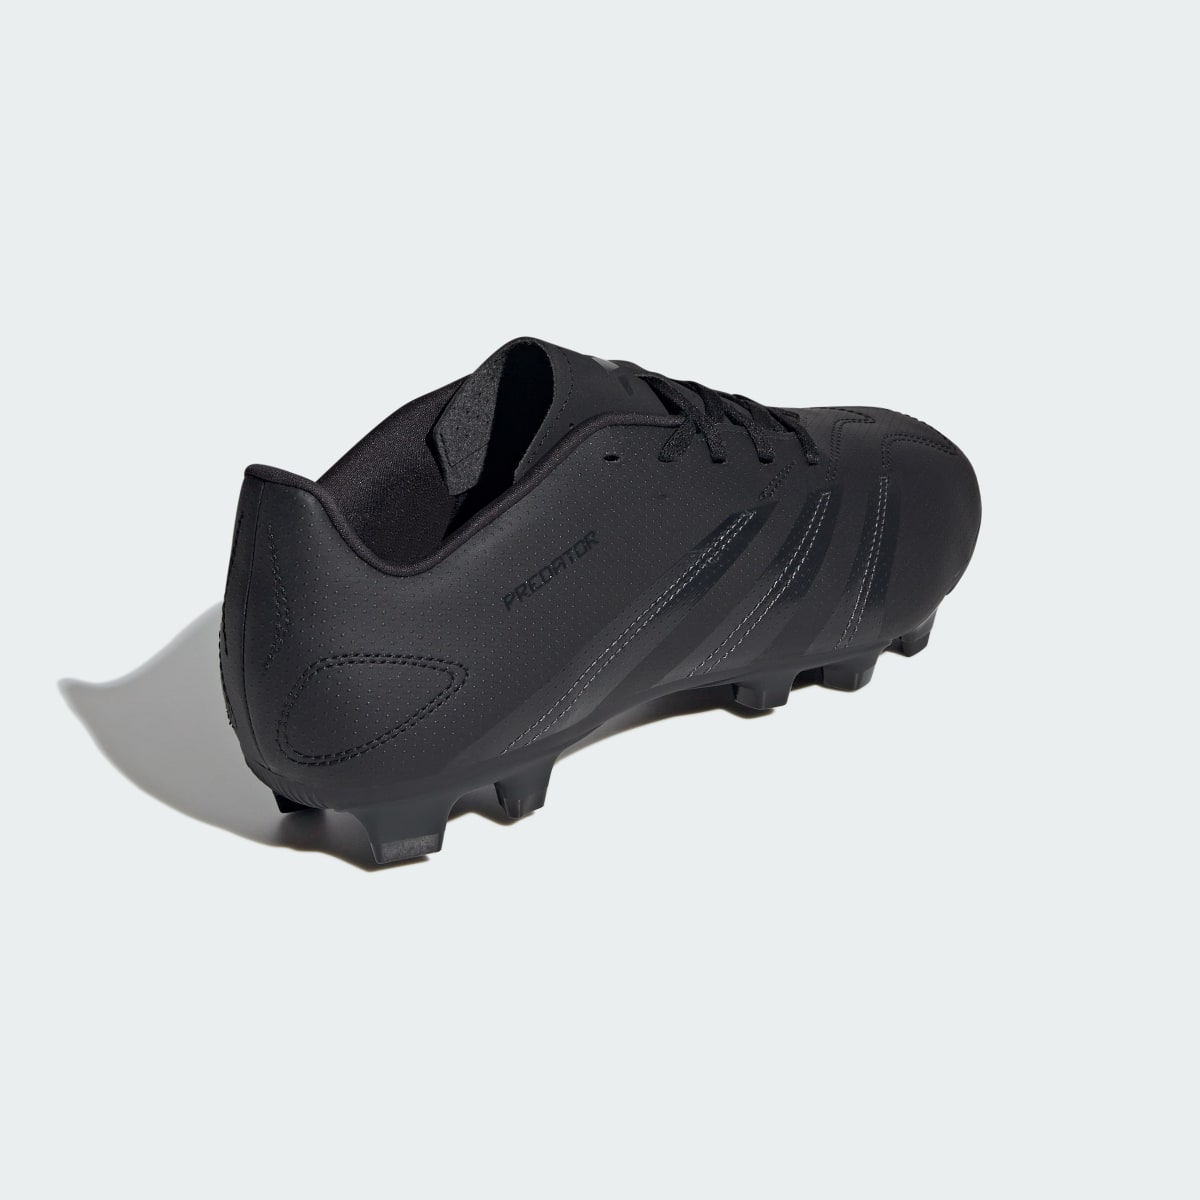 Adidas Predator Club Flexible Ground Football Boots. 6